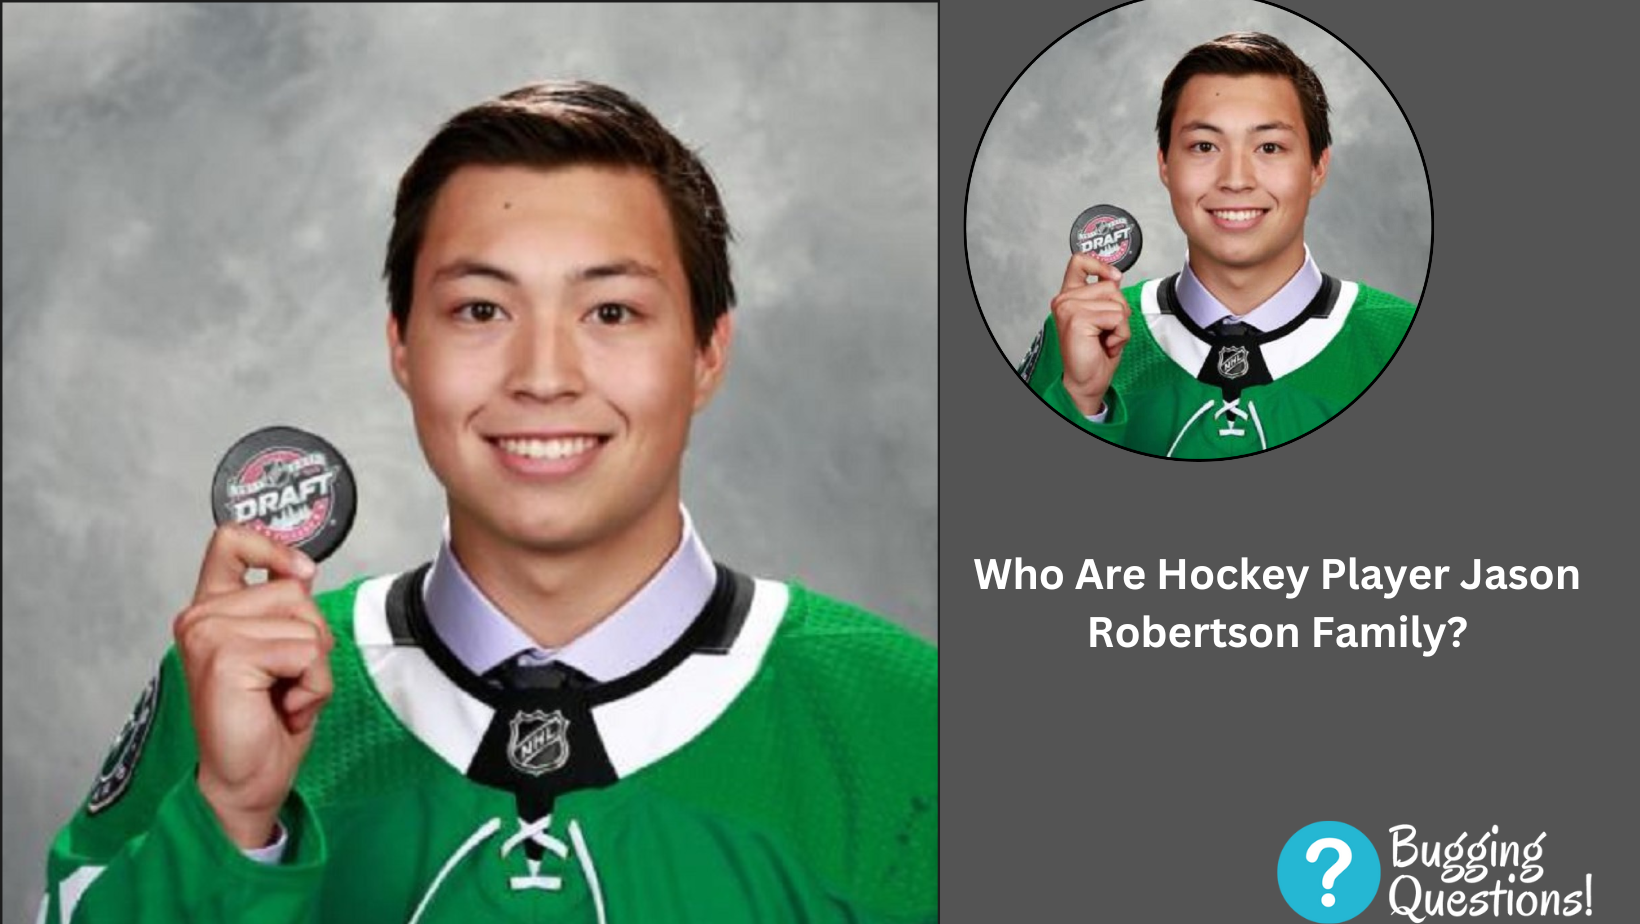 Who Are Hockey Player Jason Robertson Family?